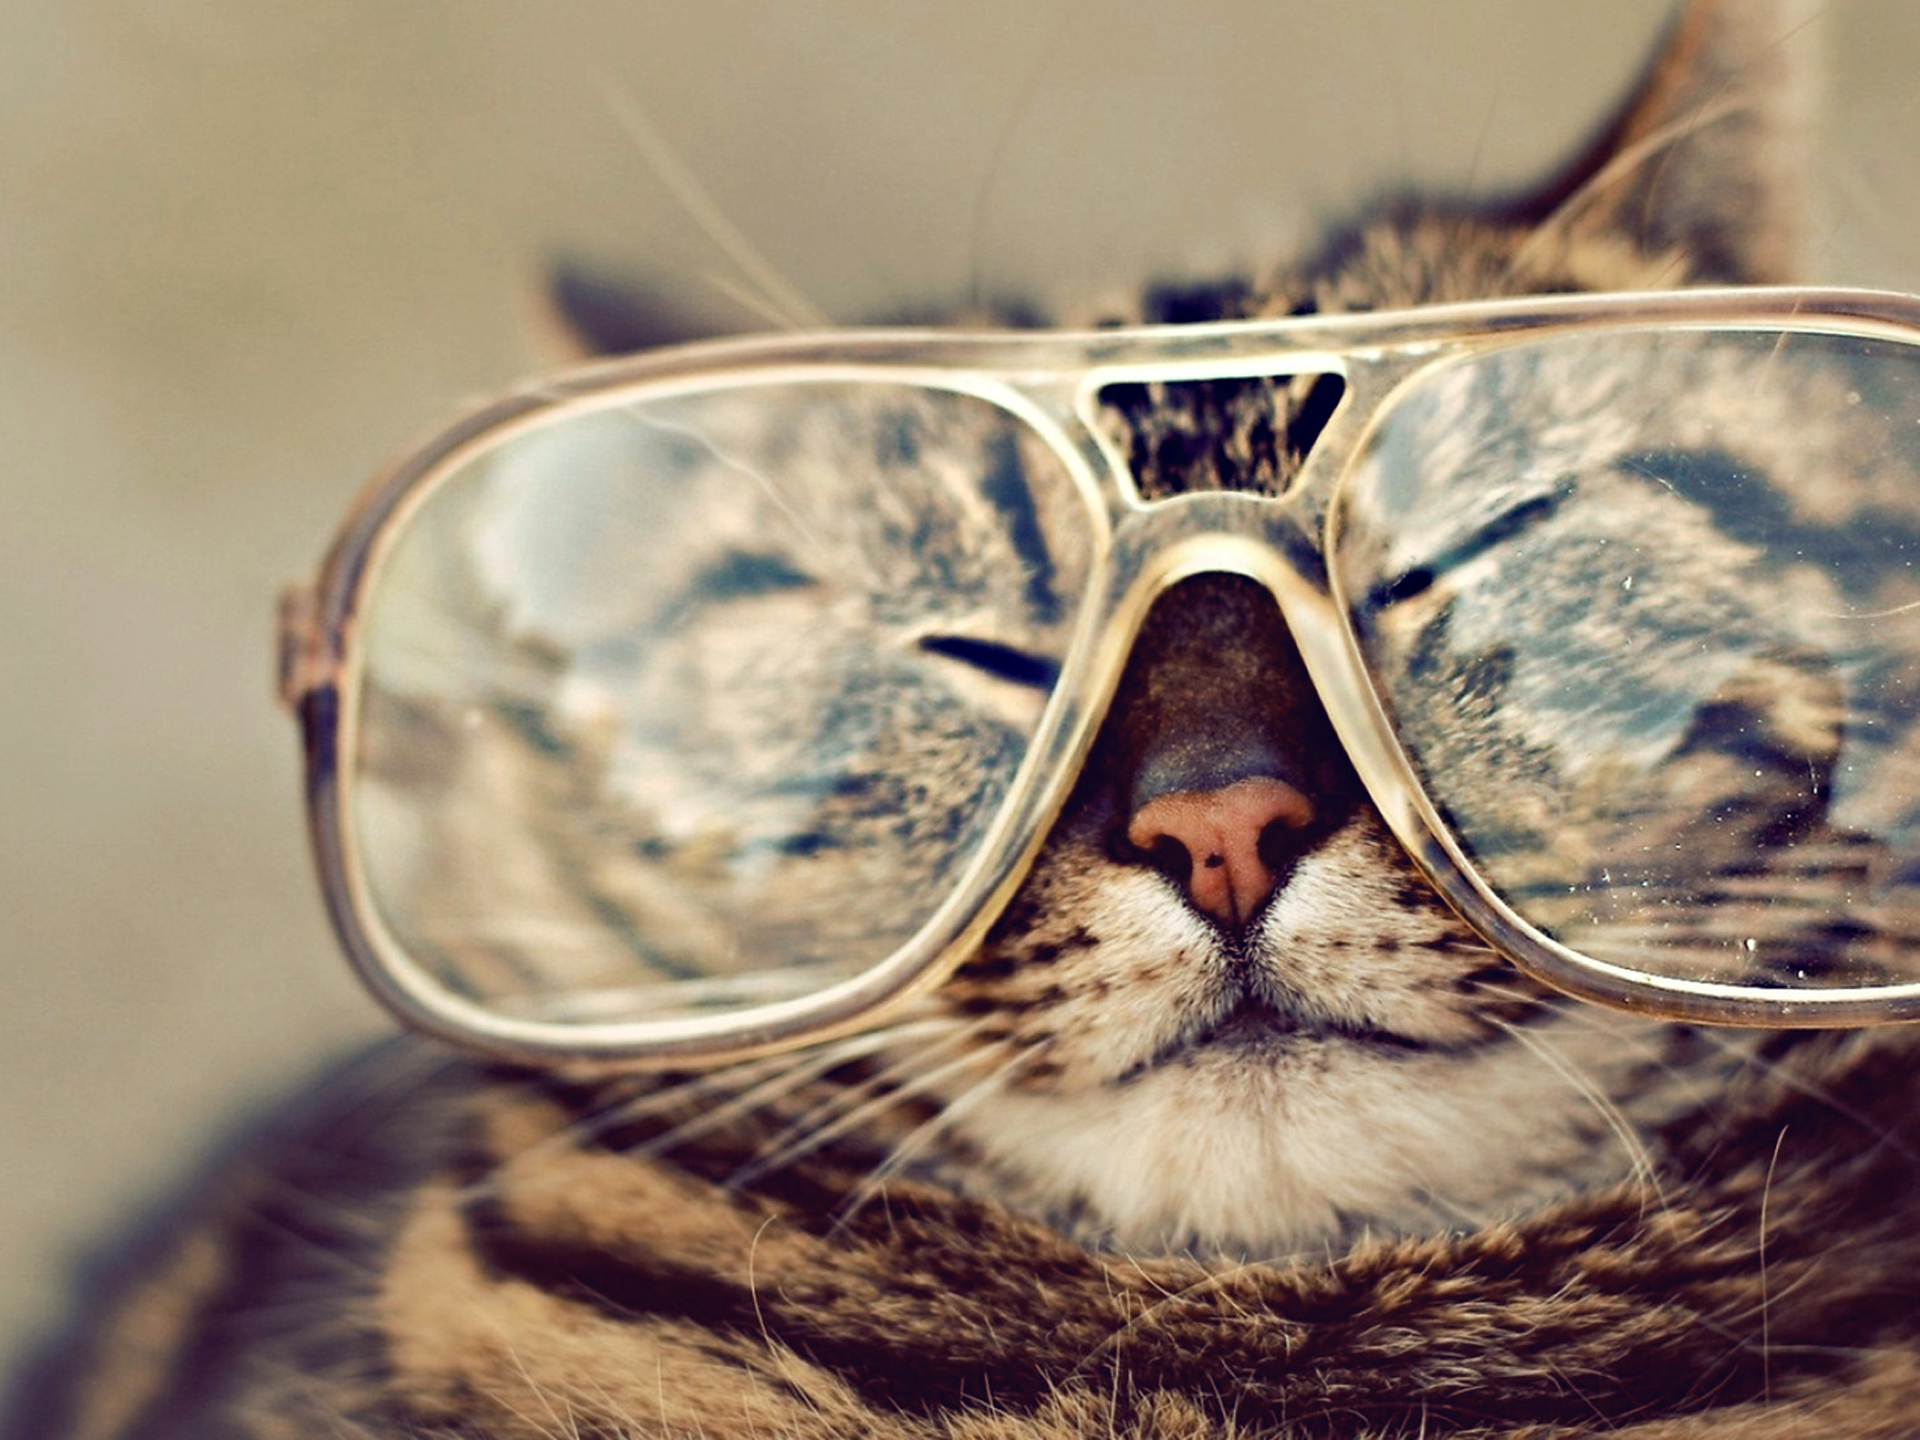 335825 descargar imagen gatos, animales, gato, lentes: fondos de pantalla y protectores de pantalla gratis